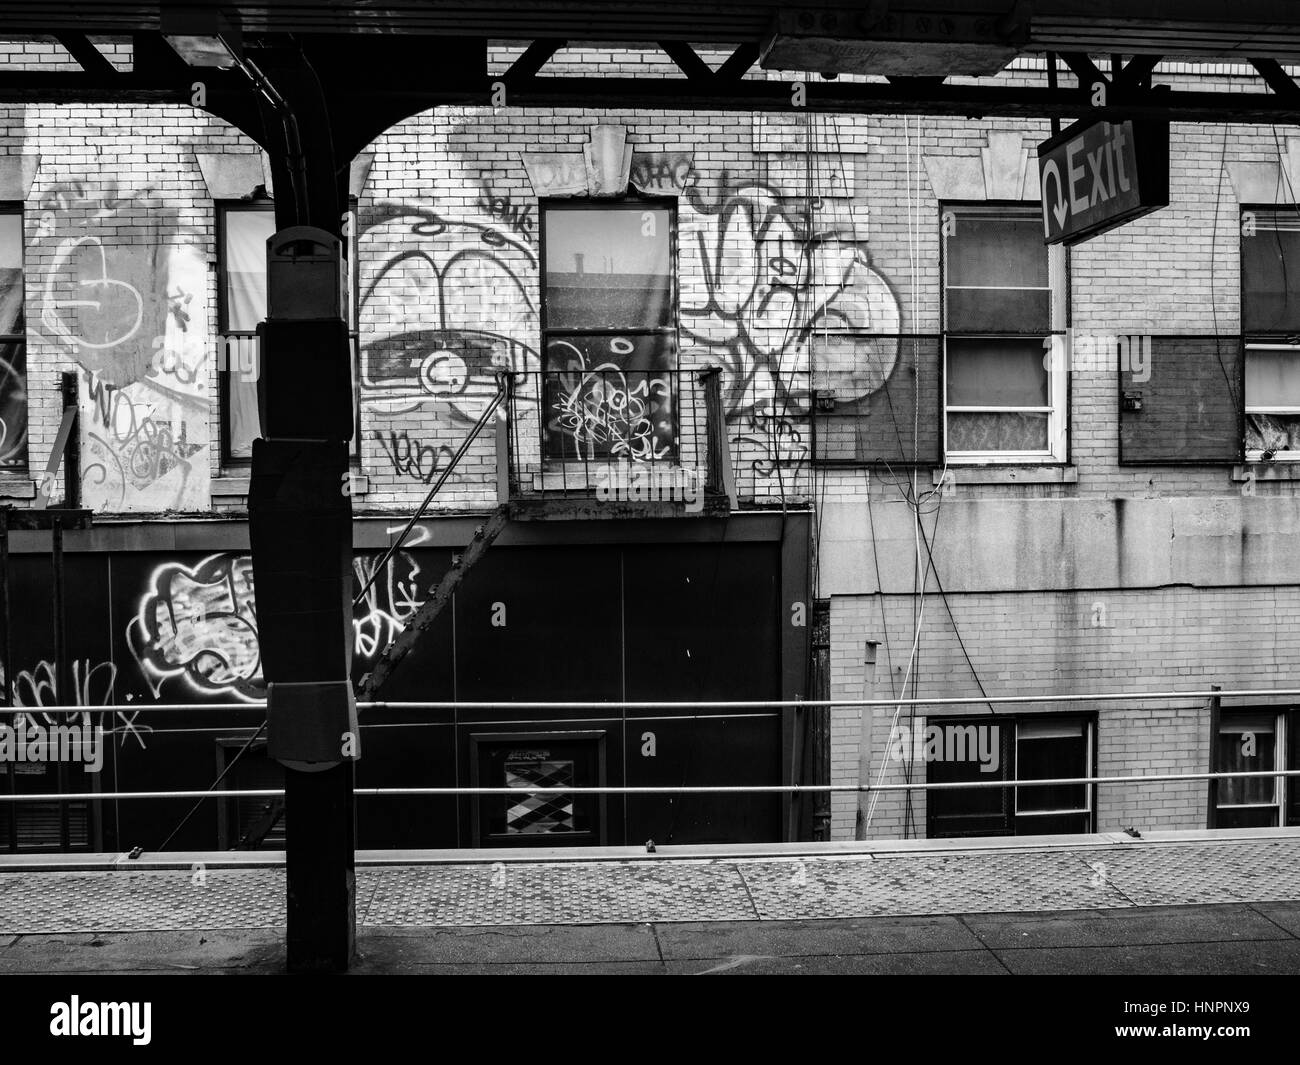 New York Subway System. Graffiti platform in Brooklyn. Stock Photo